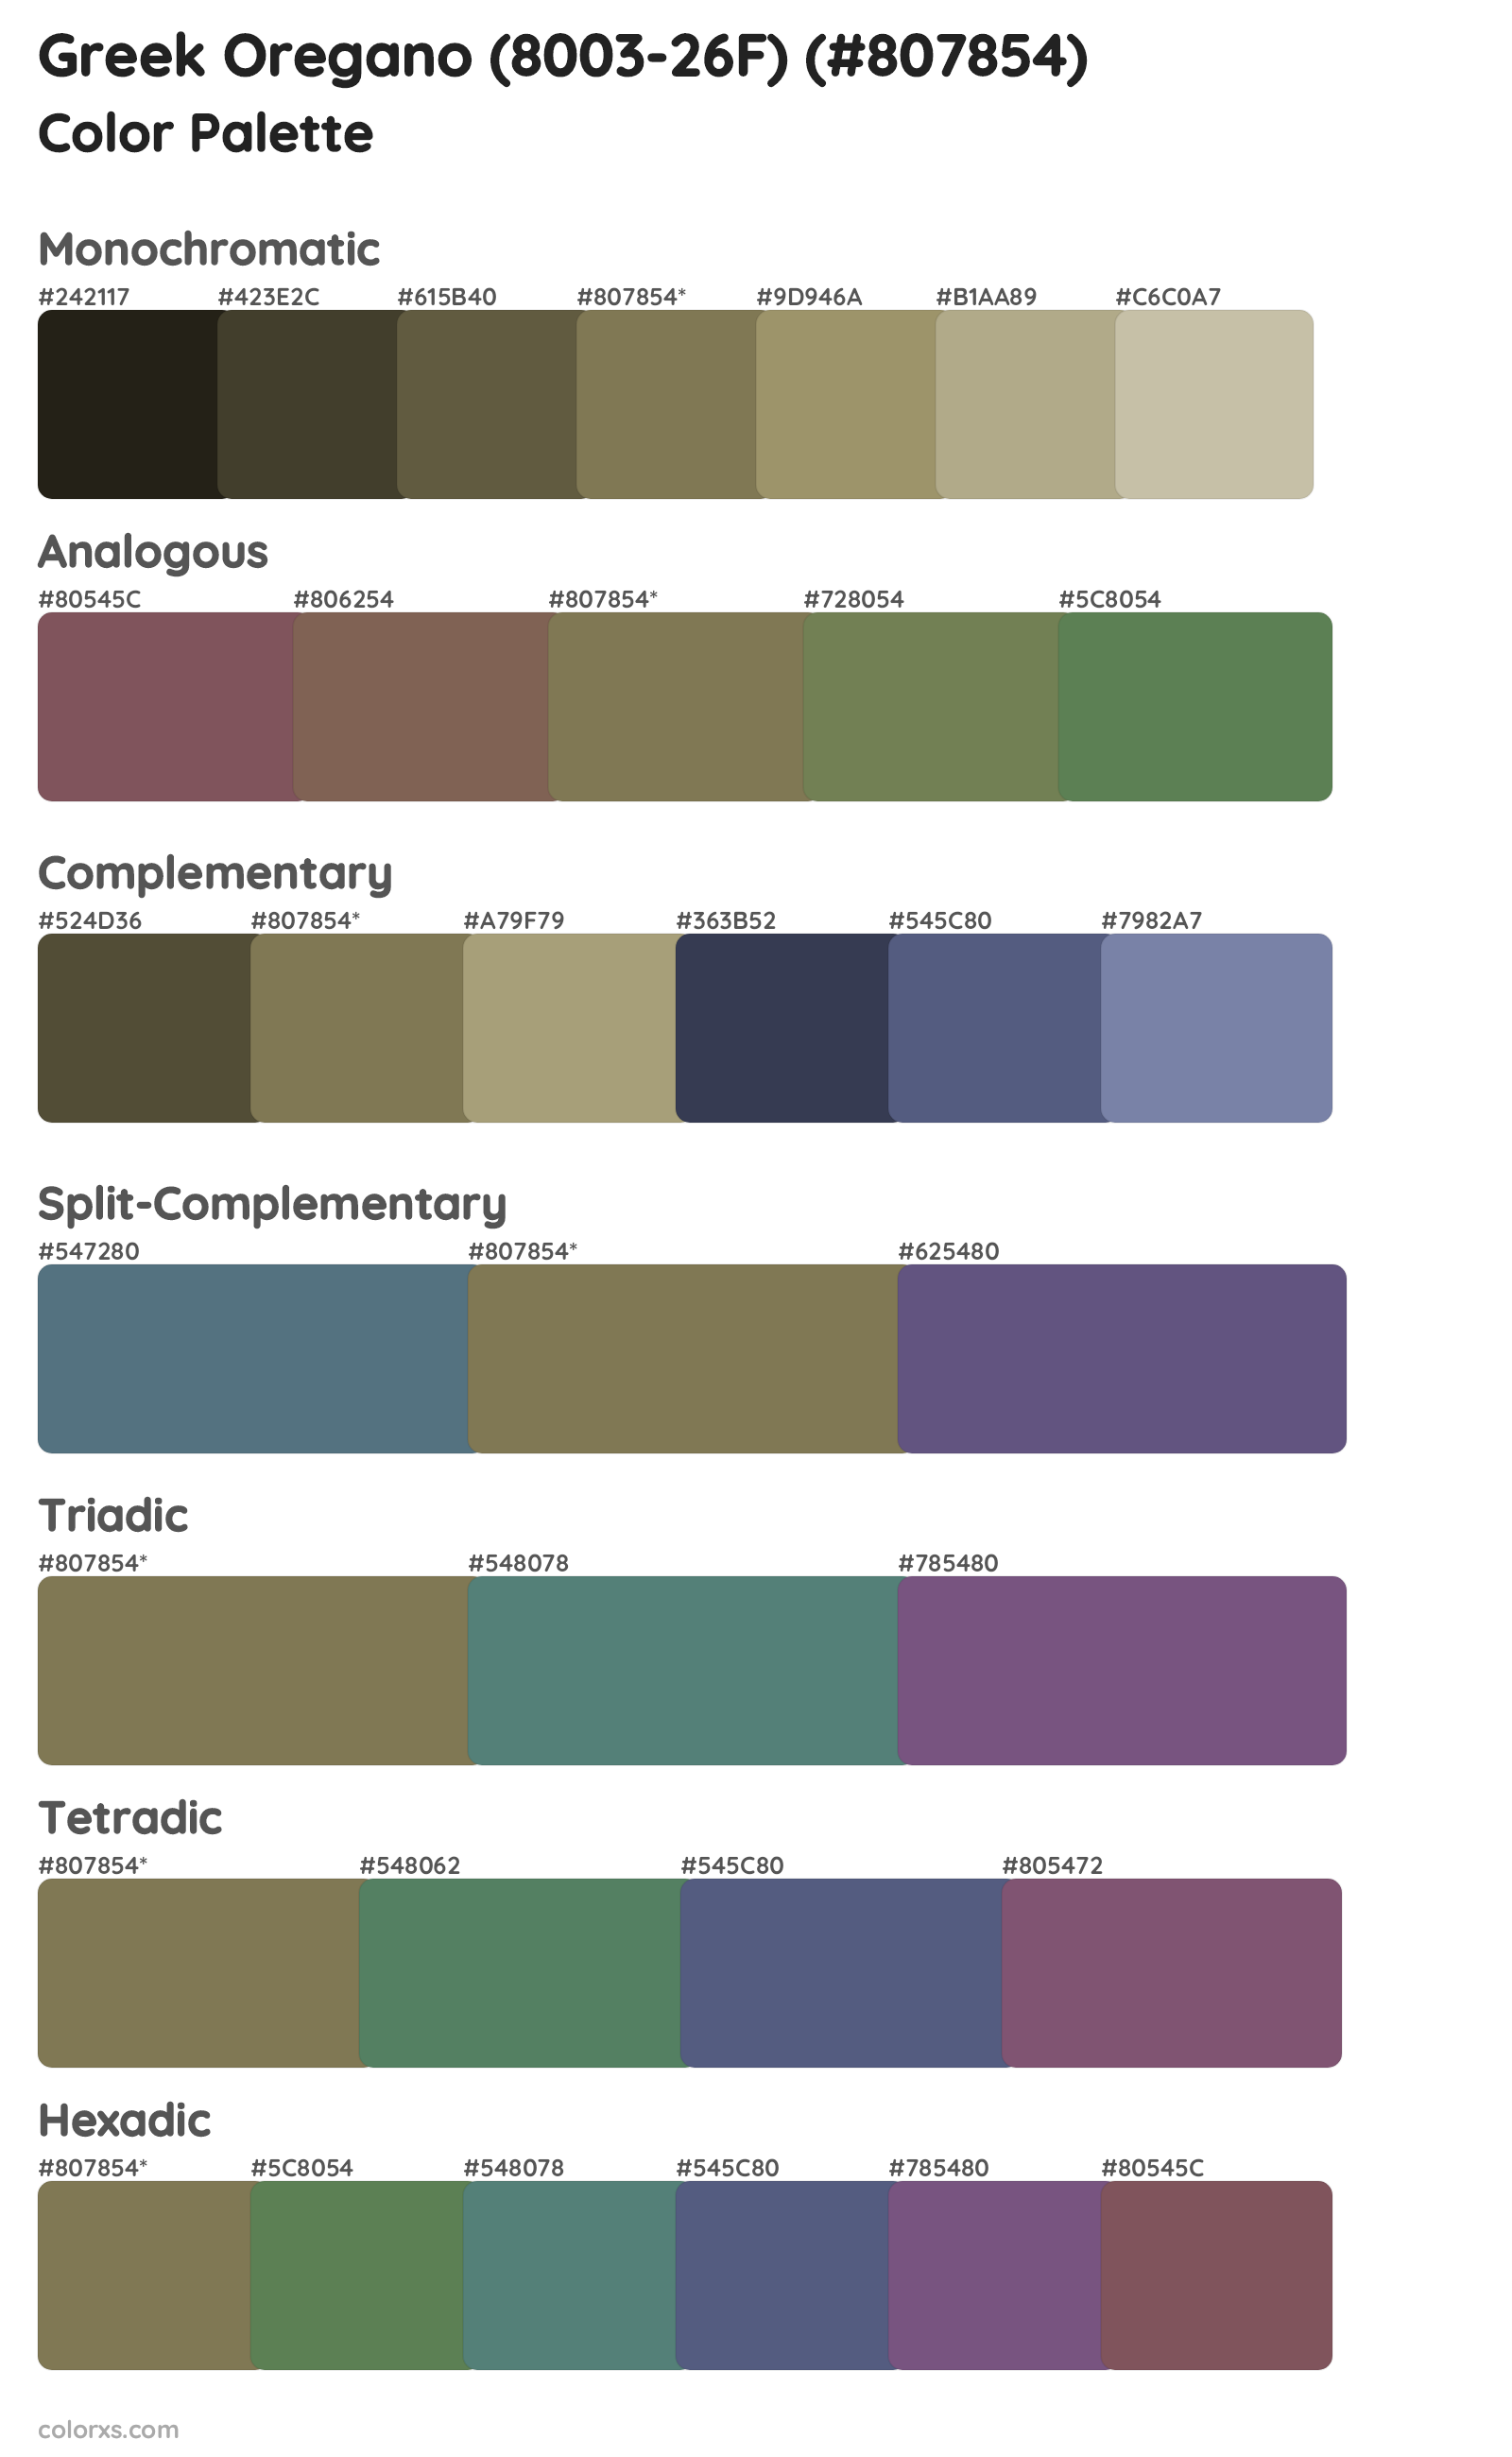 Greek Oregano (8003-26F) Color Scheme Palettes